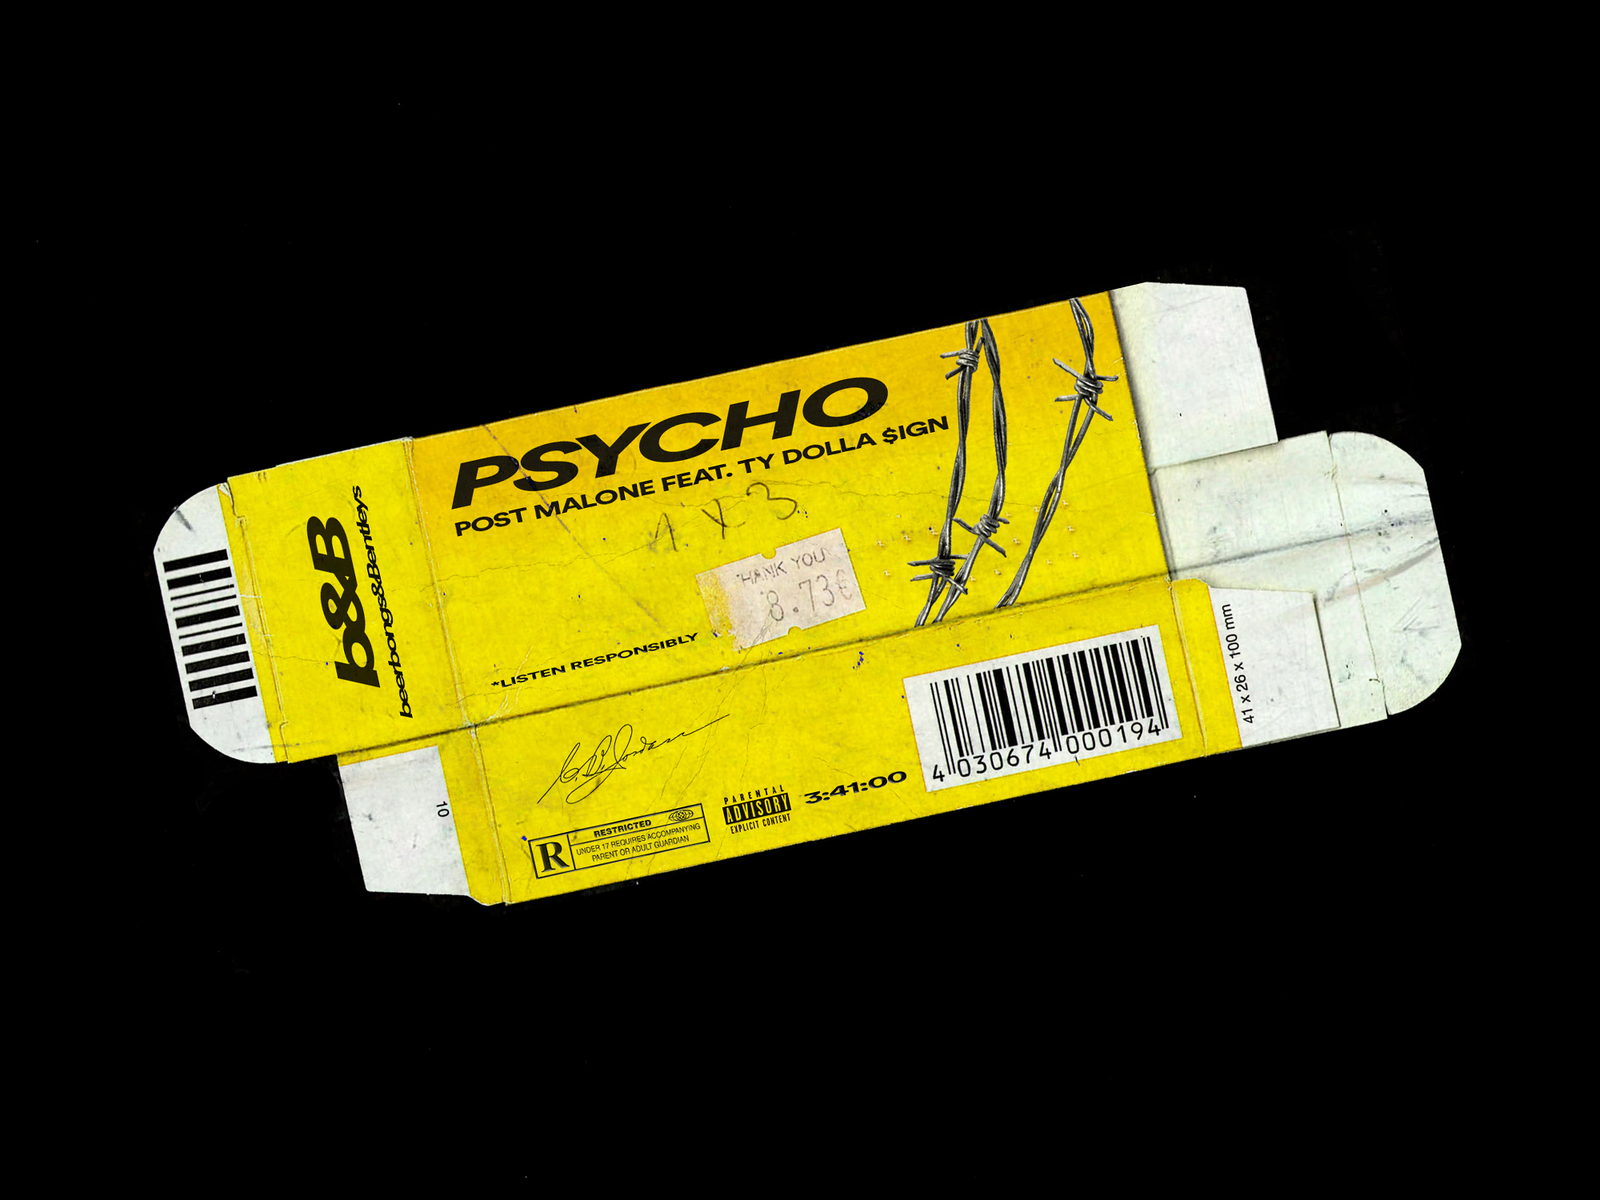 Pills For Psycho By Post Malone By Nick Kachanovsky On Dribbble